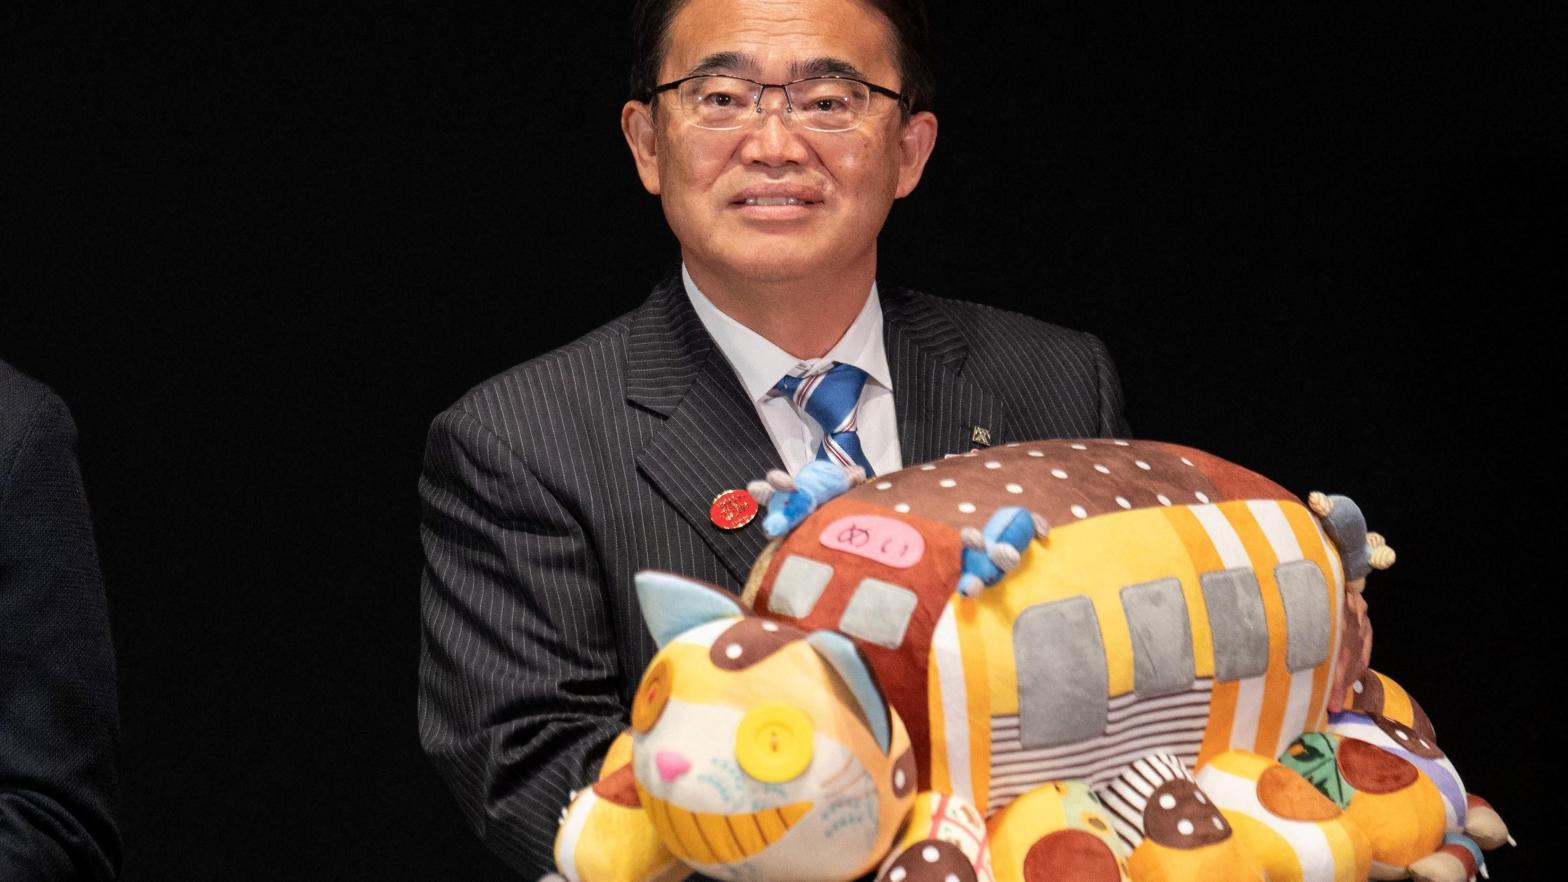 Governor Hideaki Ōmura, who has accepted the men's apologies (Photo: YUICHI YAMAZAKI, Getty Images)